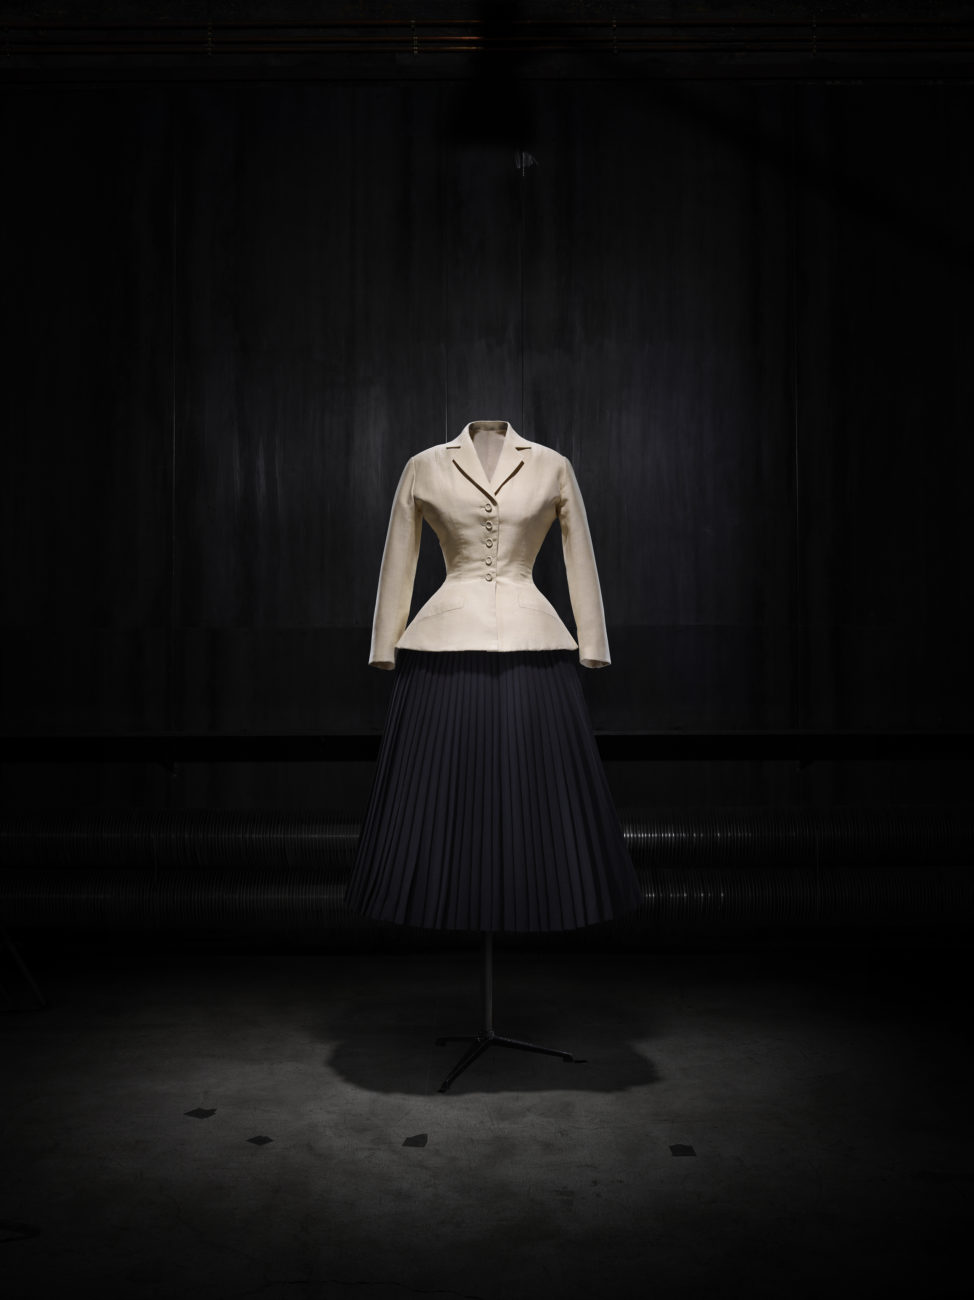 hristian Dior, Bar suit, Haute Couture Spring-Summer 1947, Corolle line. Dior Héritage collection, Paris. ©Laziz Hamani.